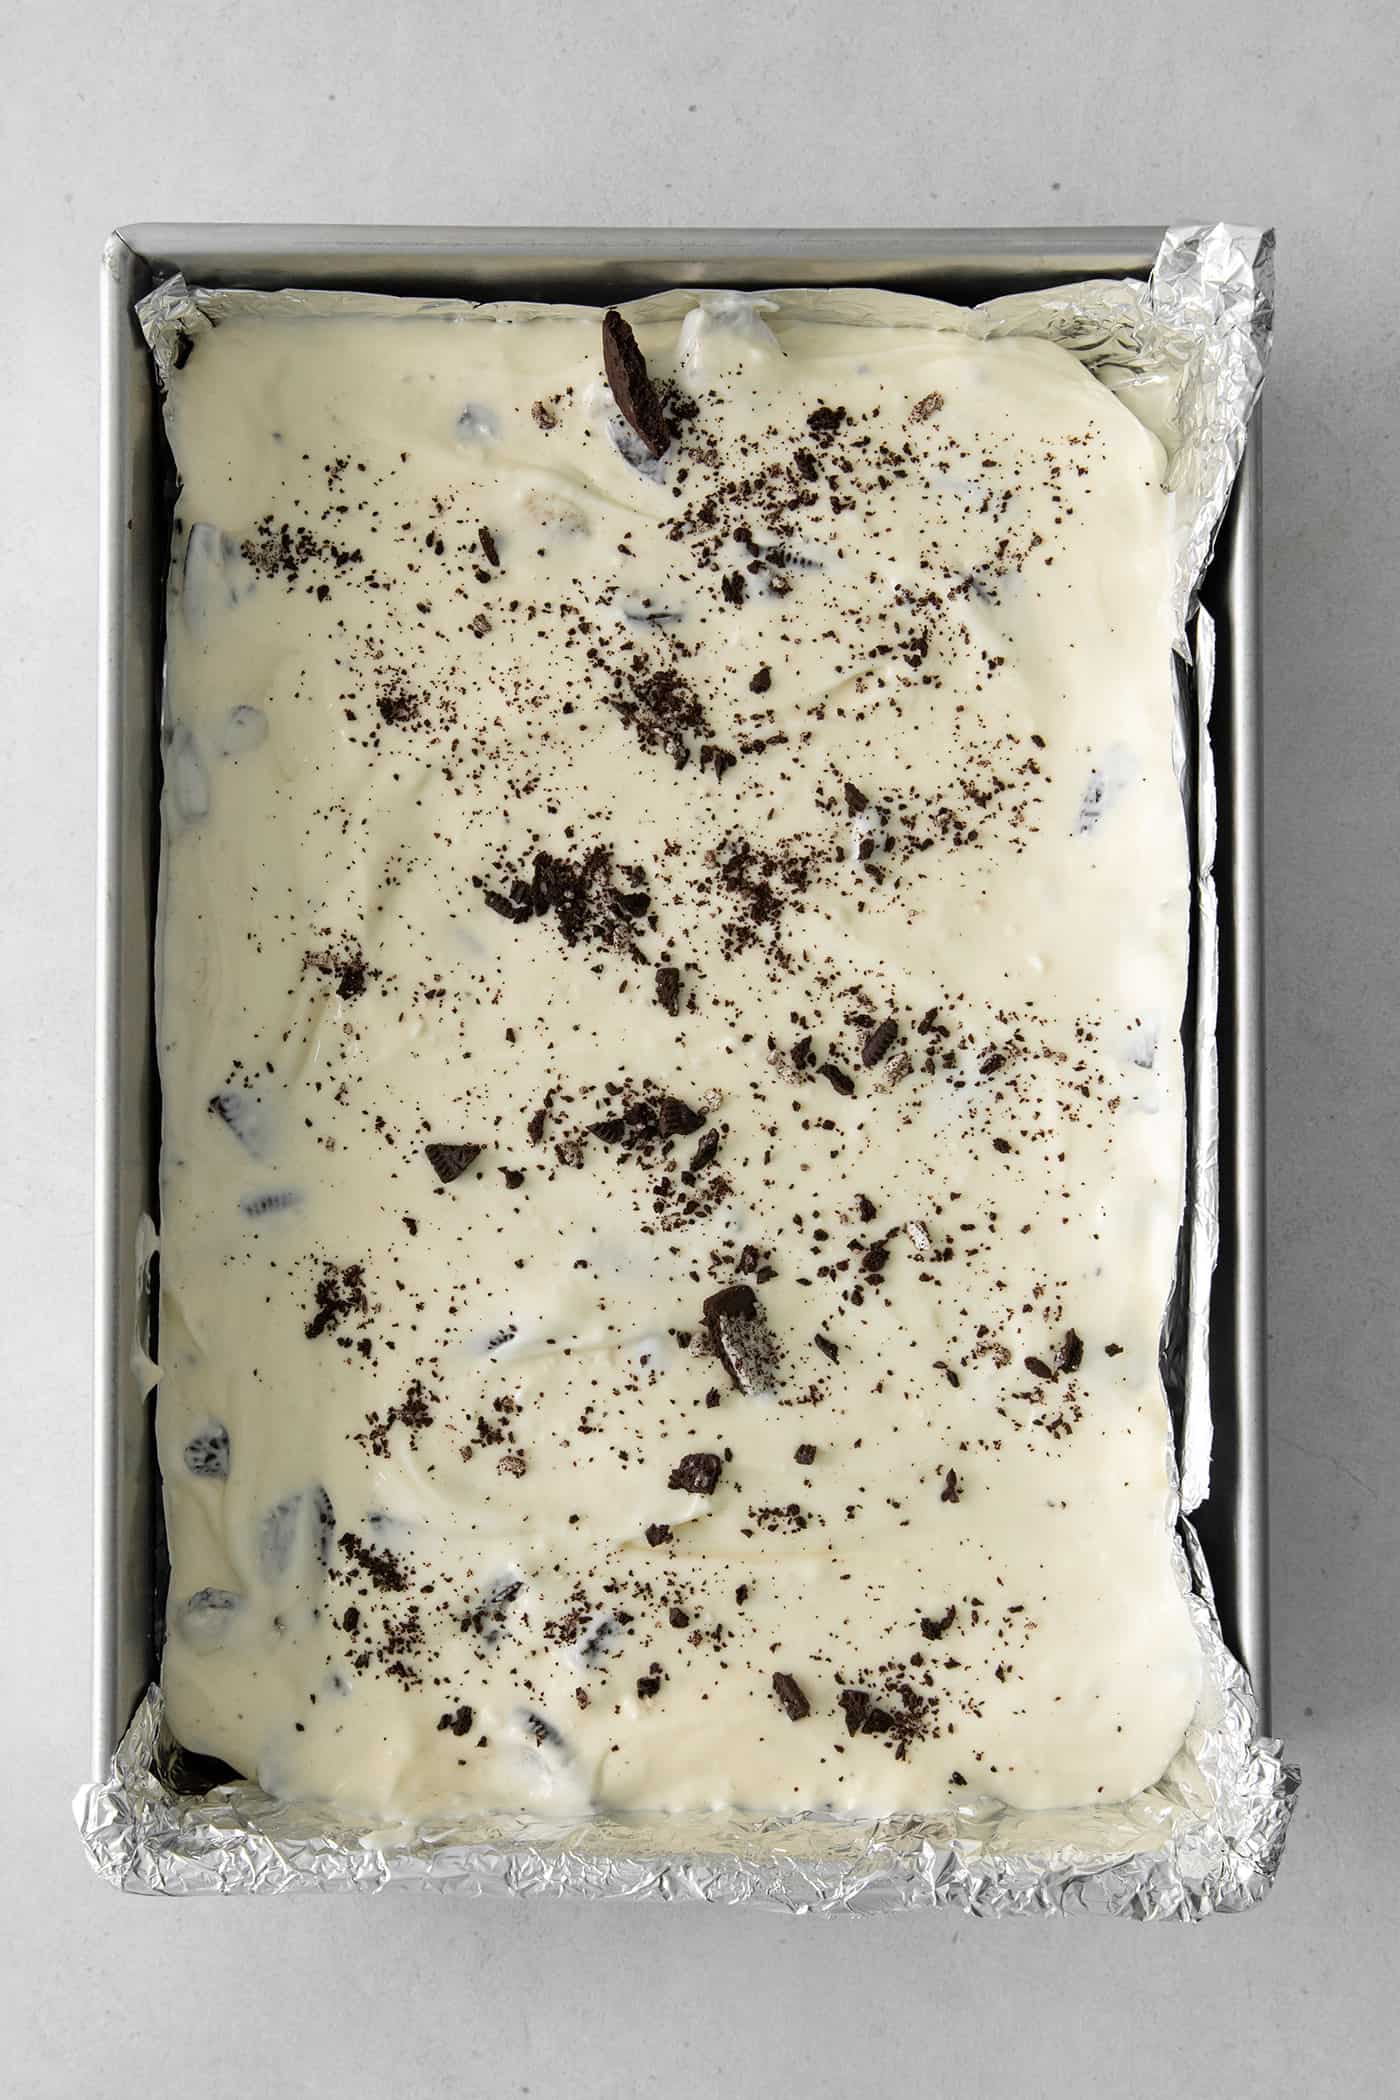 A cake pan of Oreo cheesecake batter